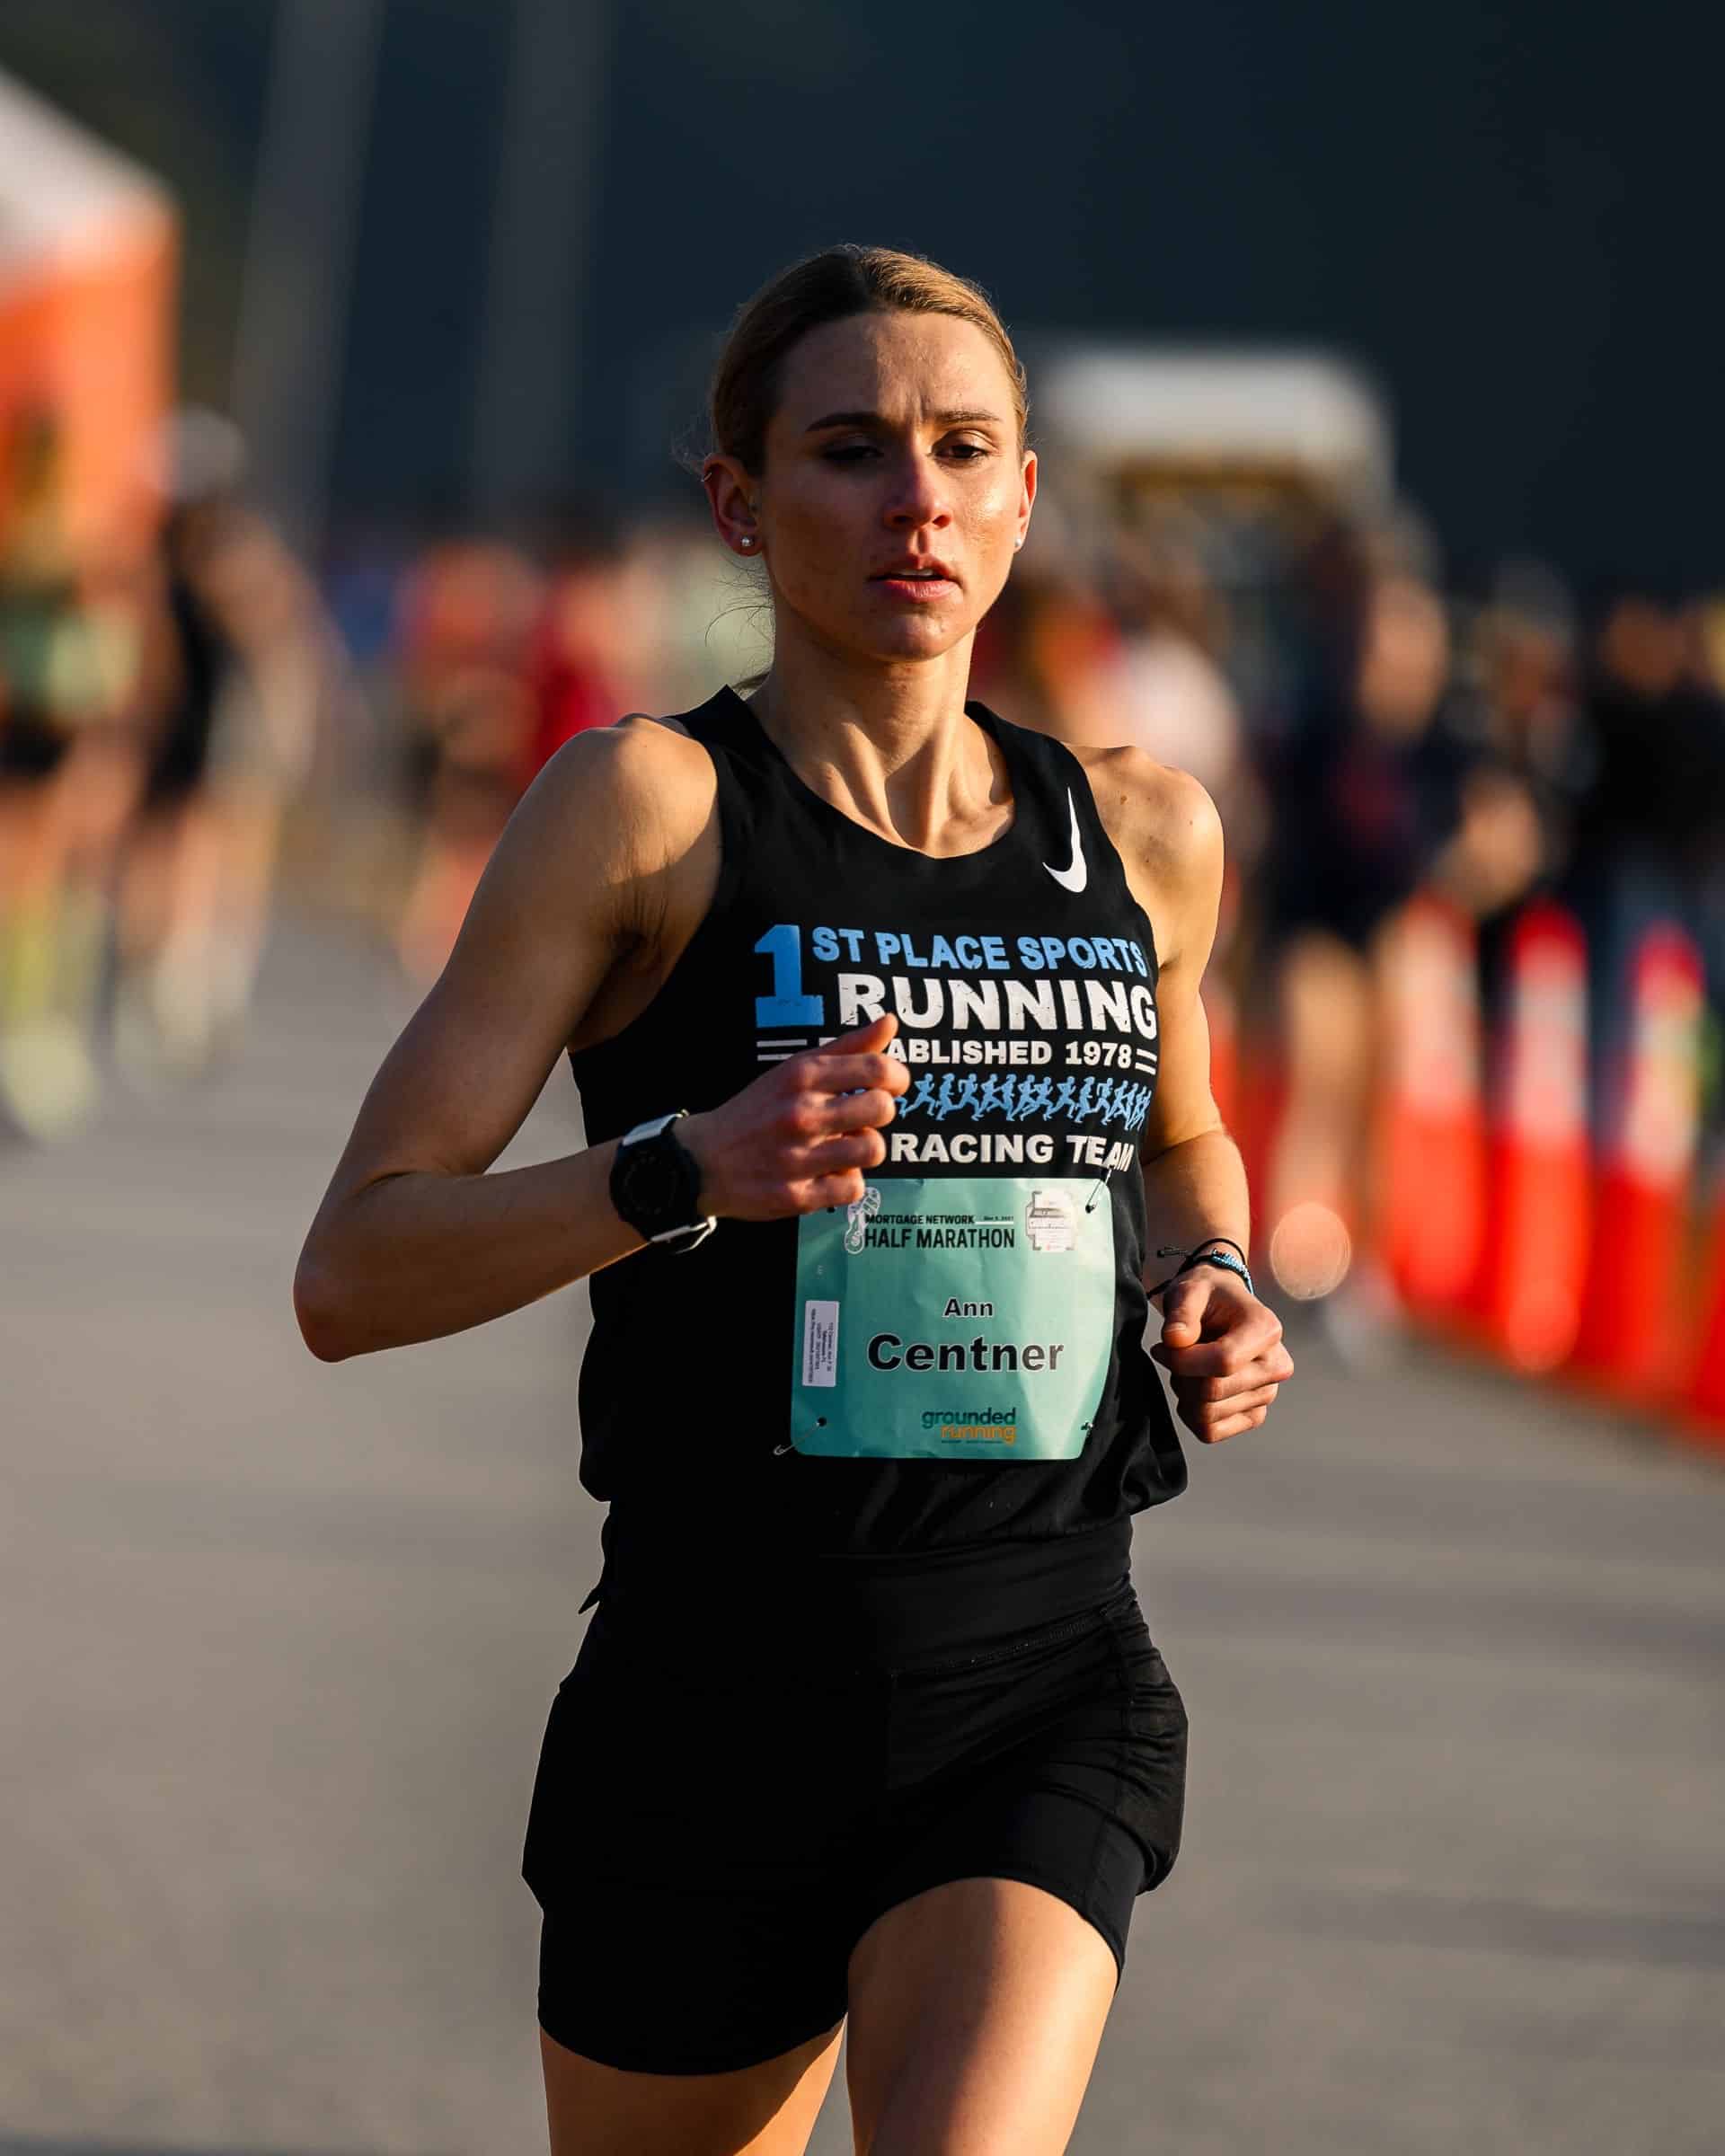 Finding Her Groove: Ann Centner Rediscovers The Joy Of Running